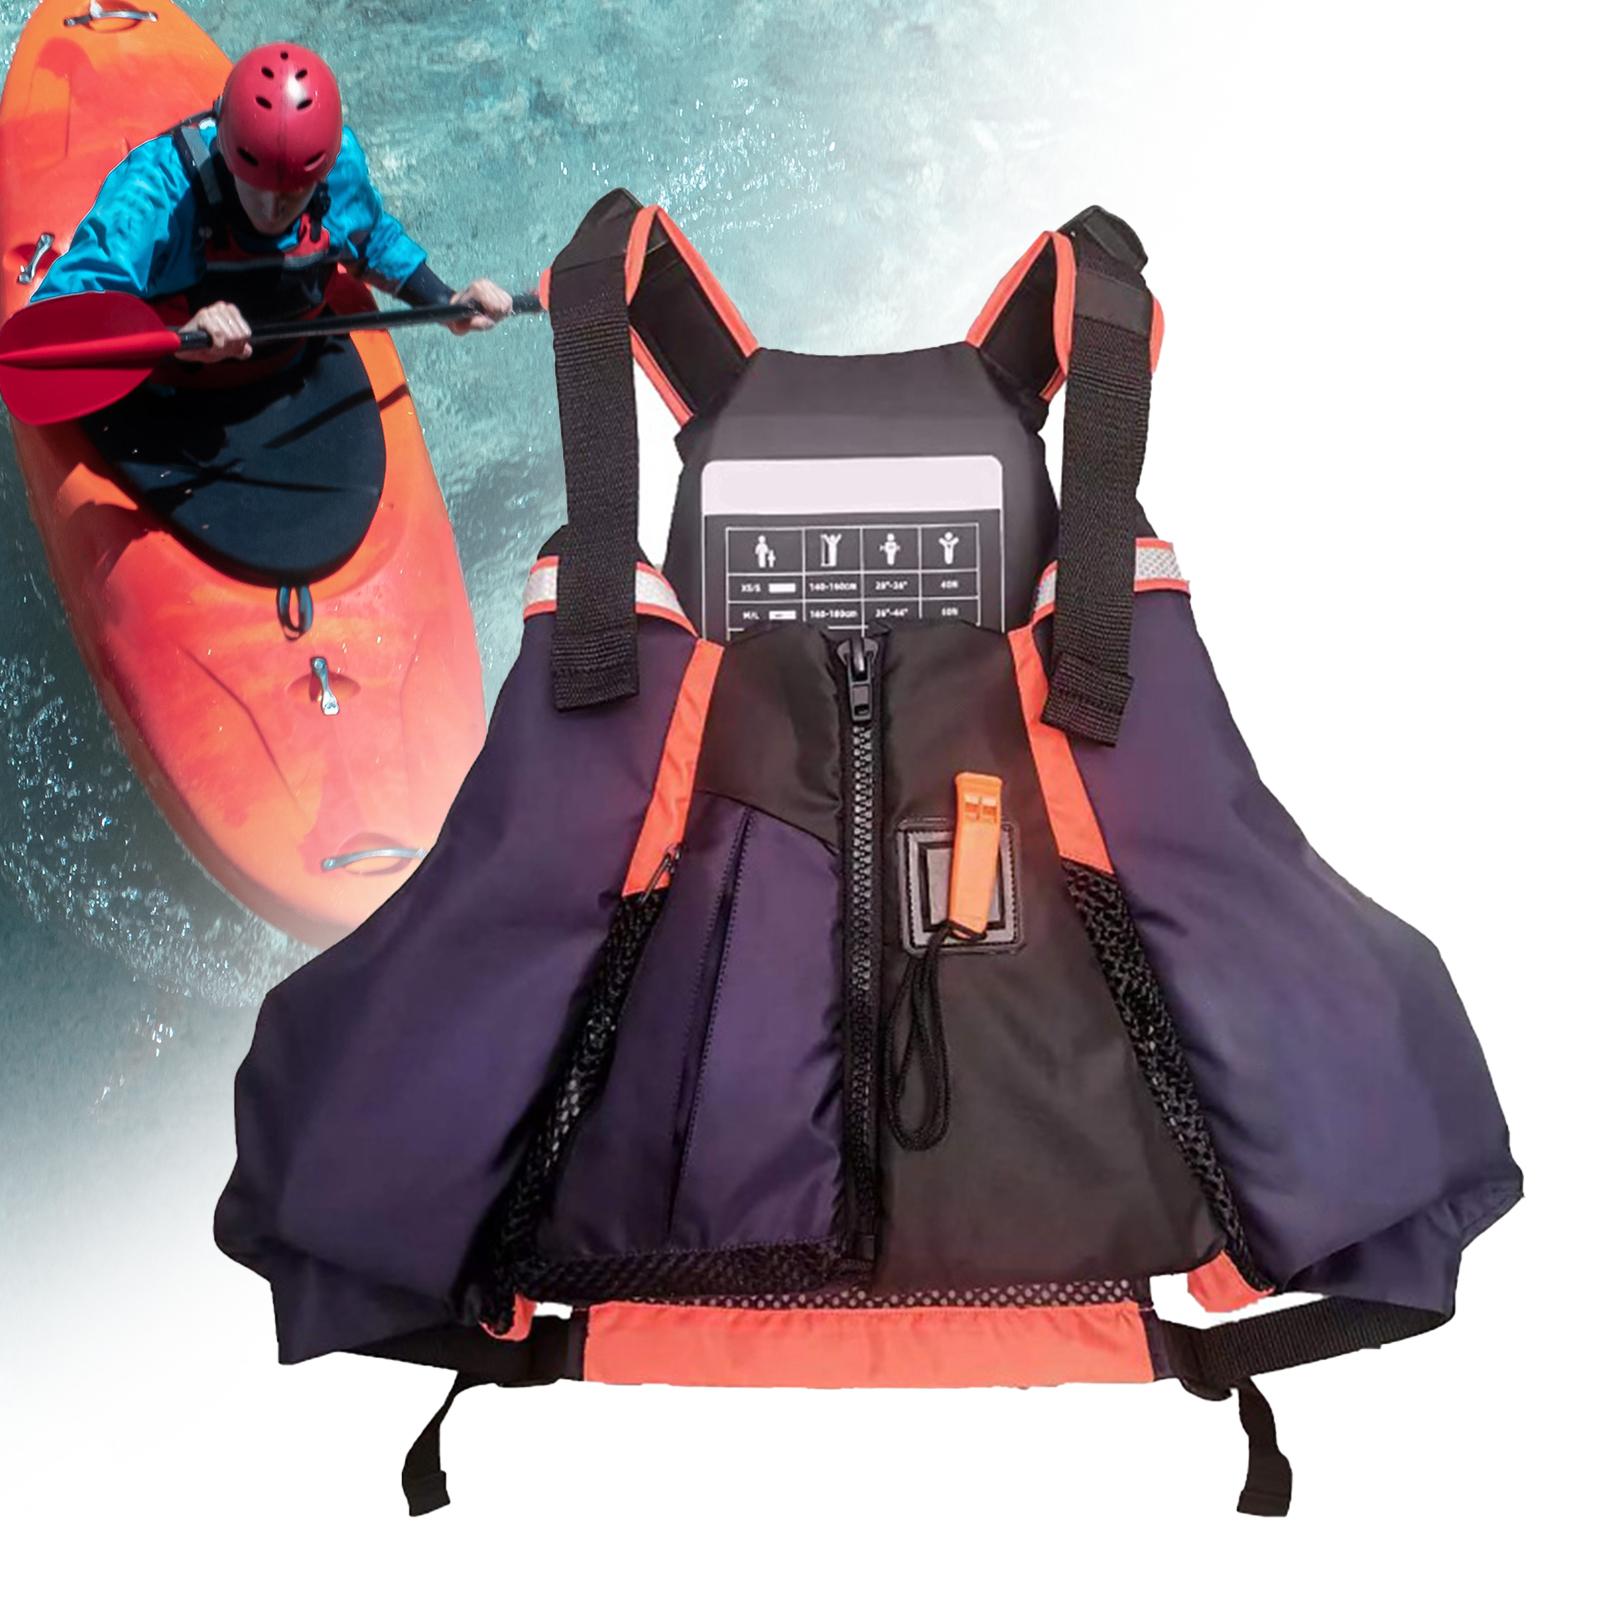 Kayak Life Jacket Swimming Vest Waterproof Portable Breathable Survival Suit XS S Navy Blue Purple